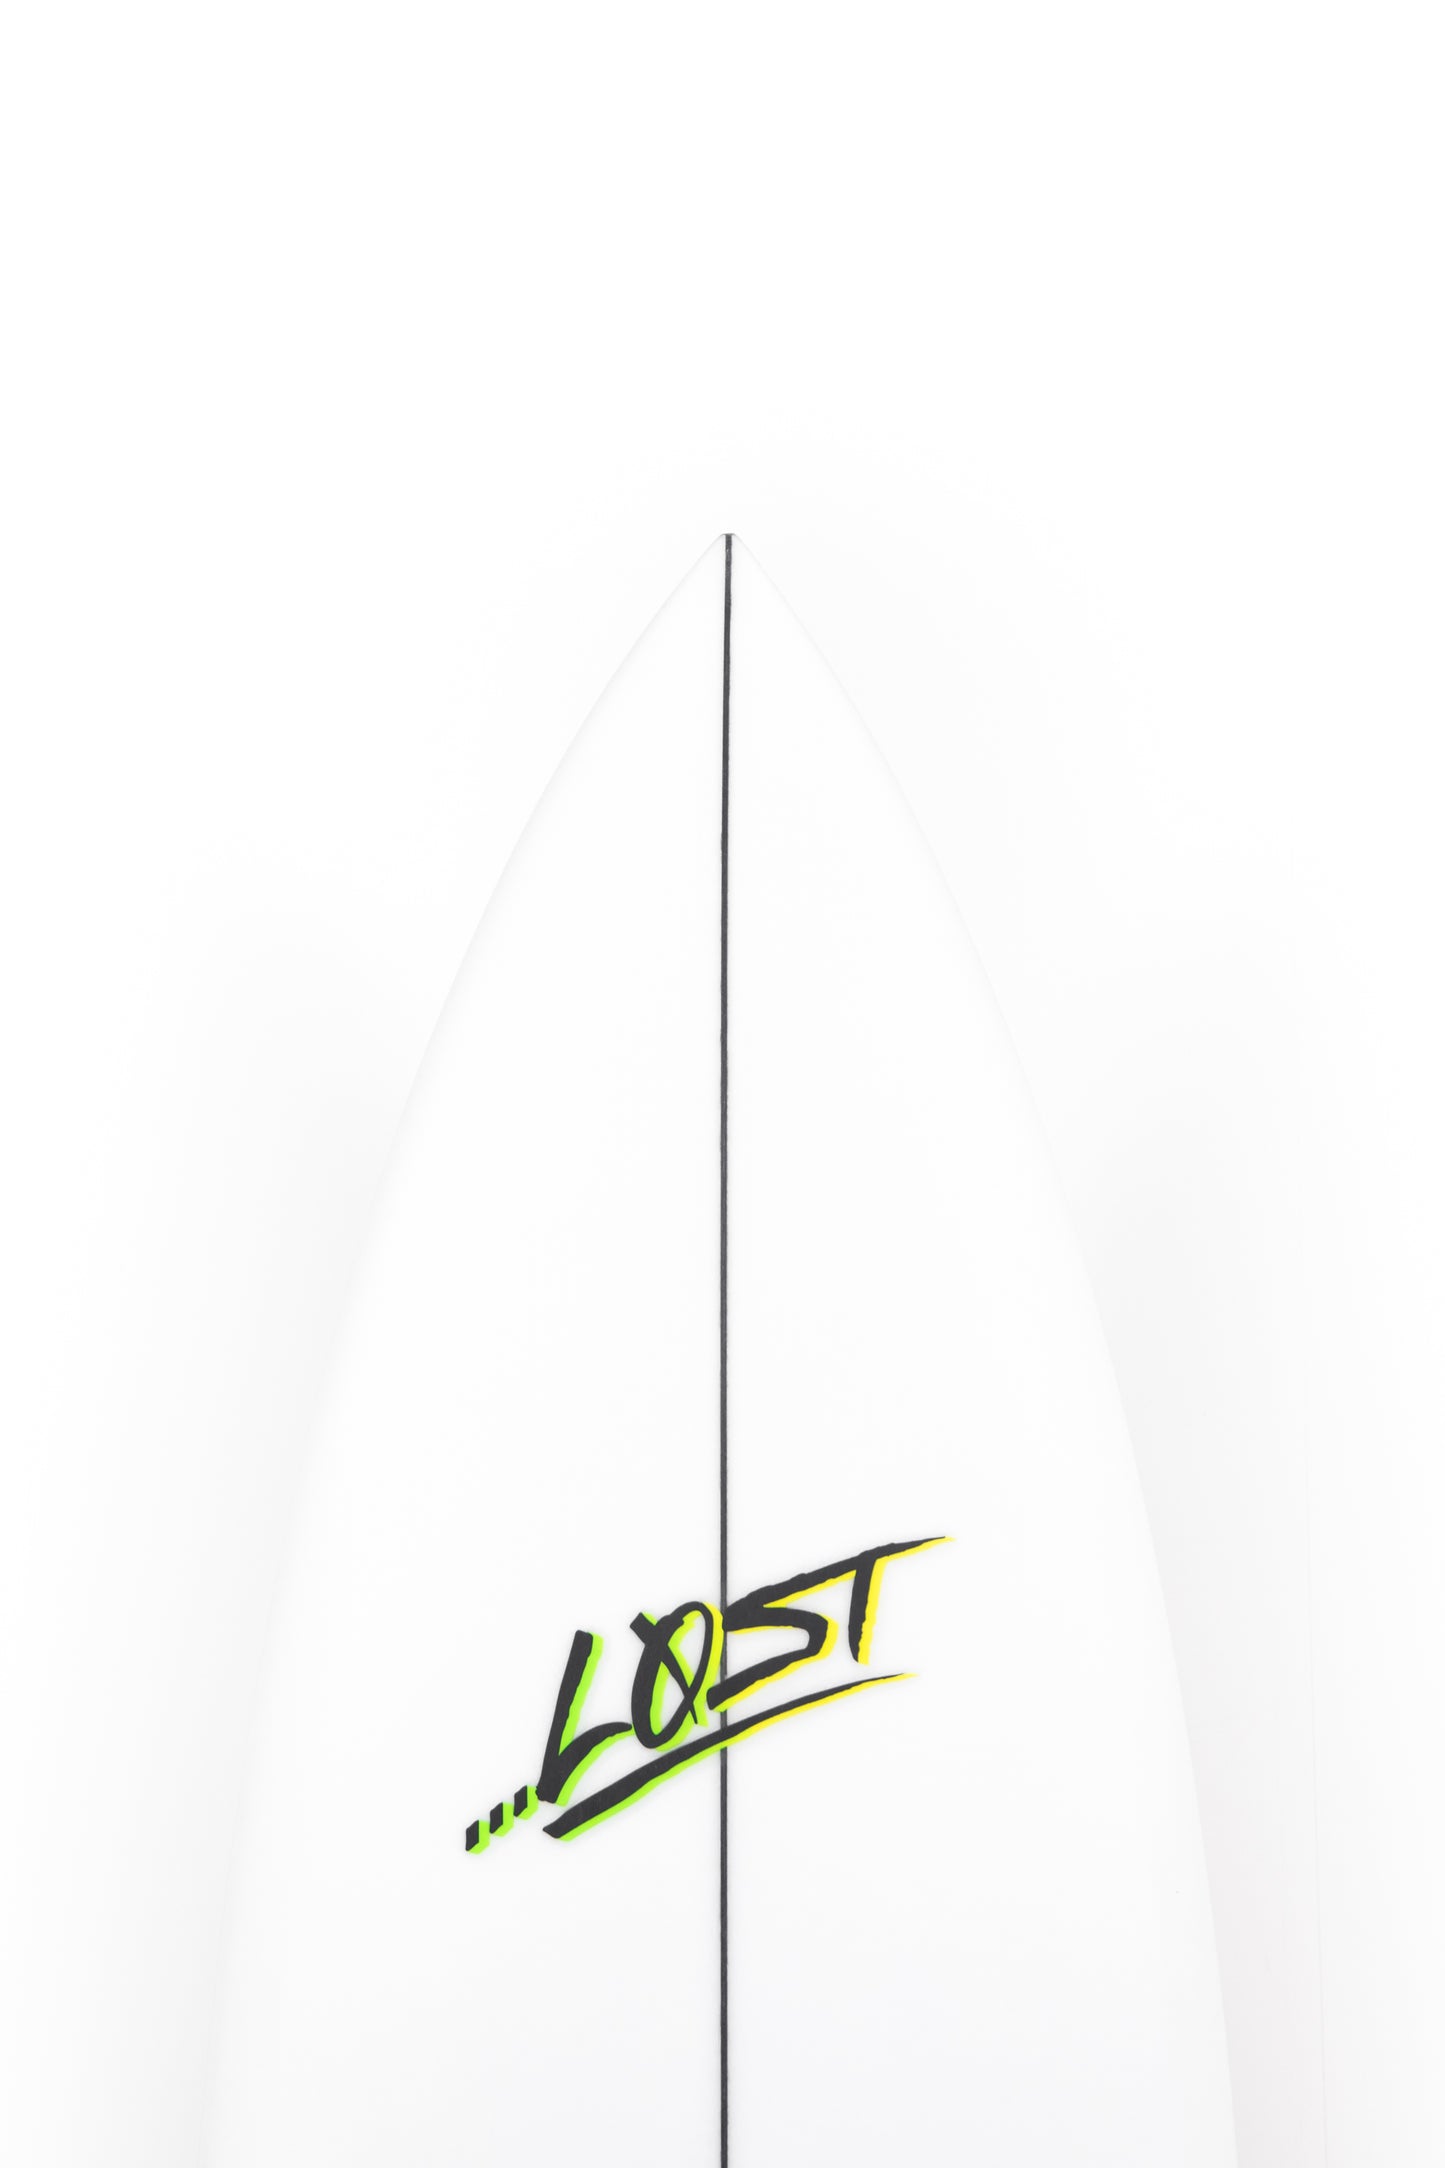 
                  
                    Pukas Surf Shop - Pukas Surf Shop - Lost Surfboard - THE RIPPER by Matt Biolos - 5'8"x 19.25" x 2.37 - 28.50L - MH19095
                  
                